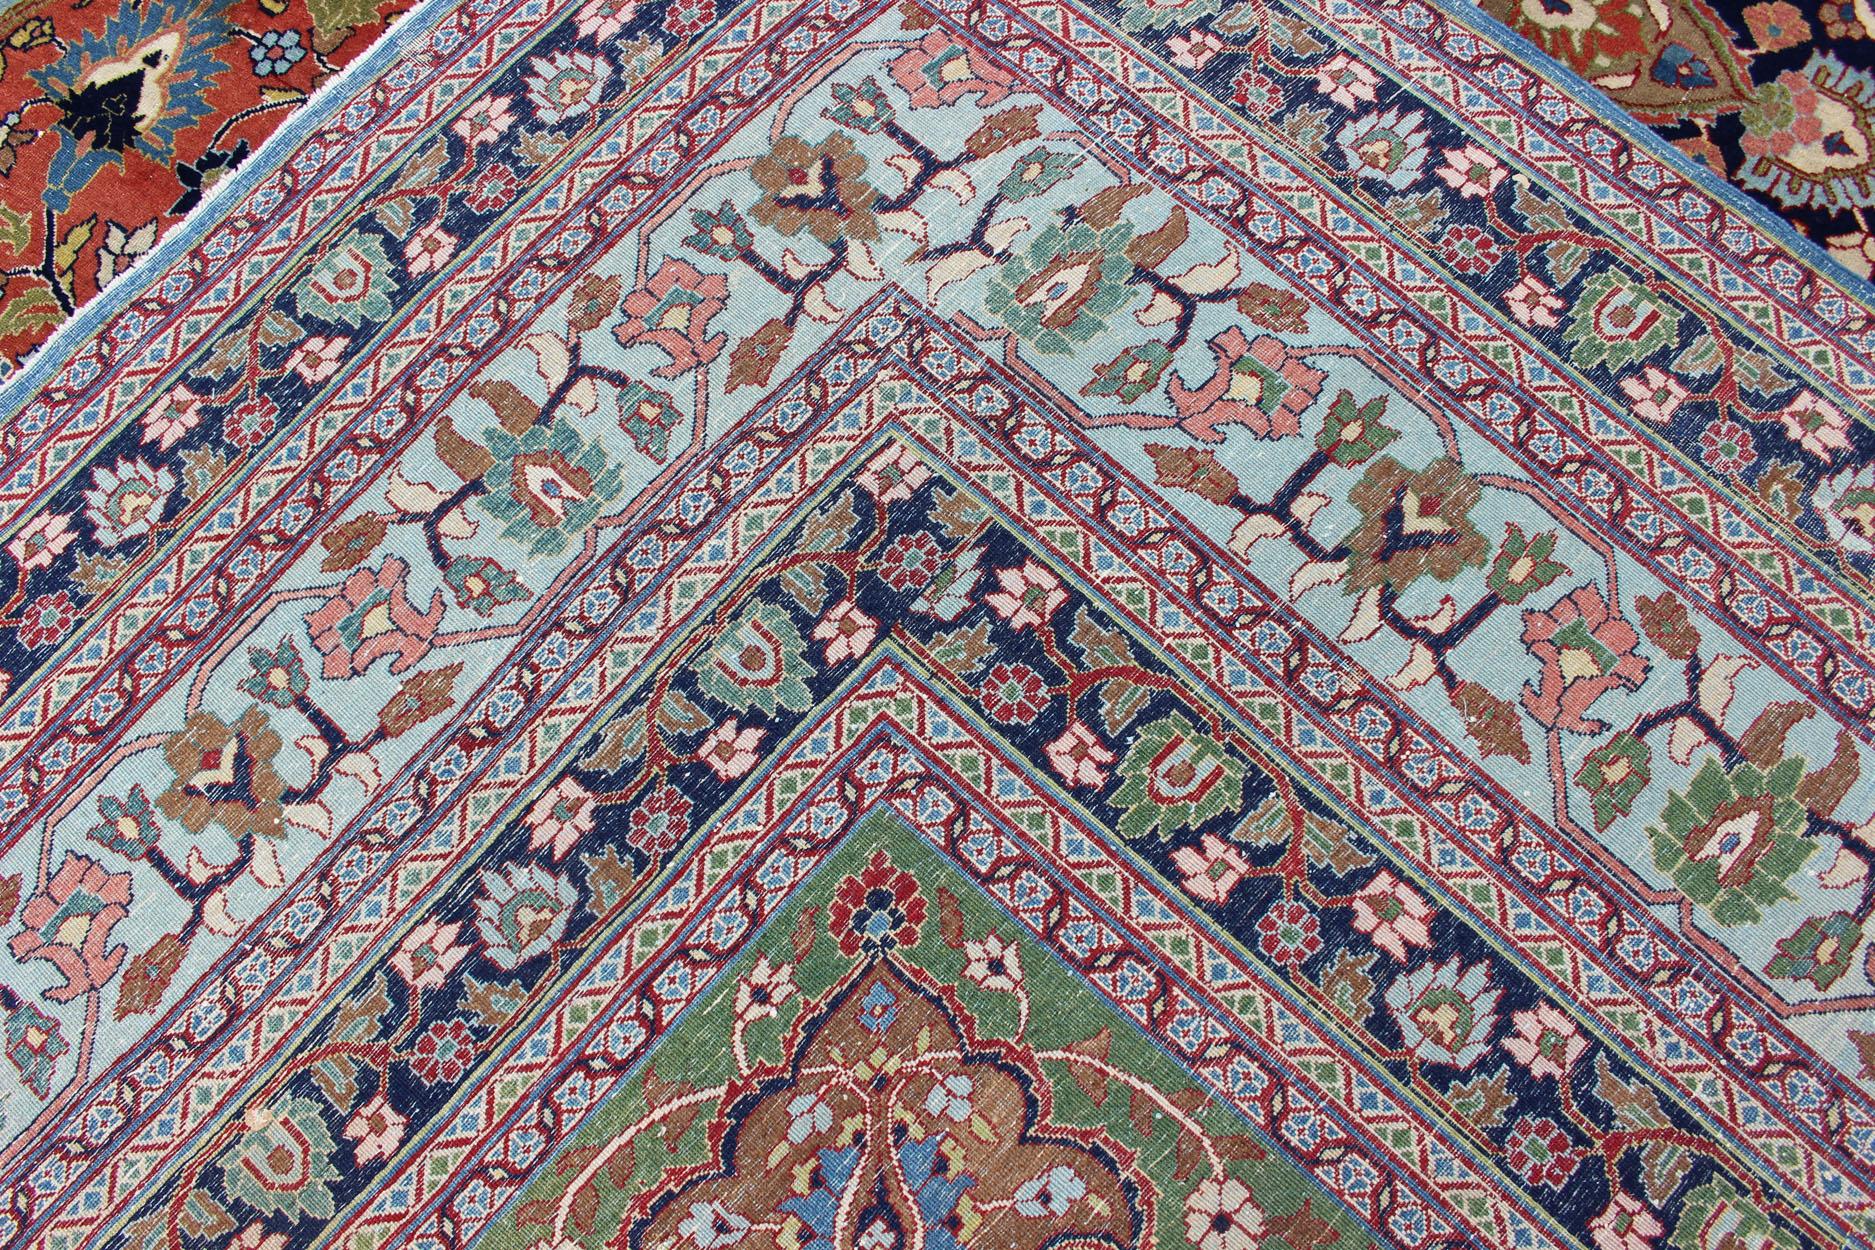 Antique Fine Persian Classic Design Tabriz Rug in Orange, Blue & Multi Colors In Excellent Condition For Sale In Atlanta, GA